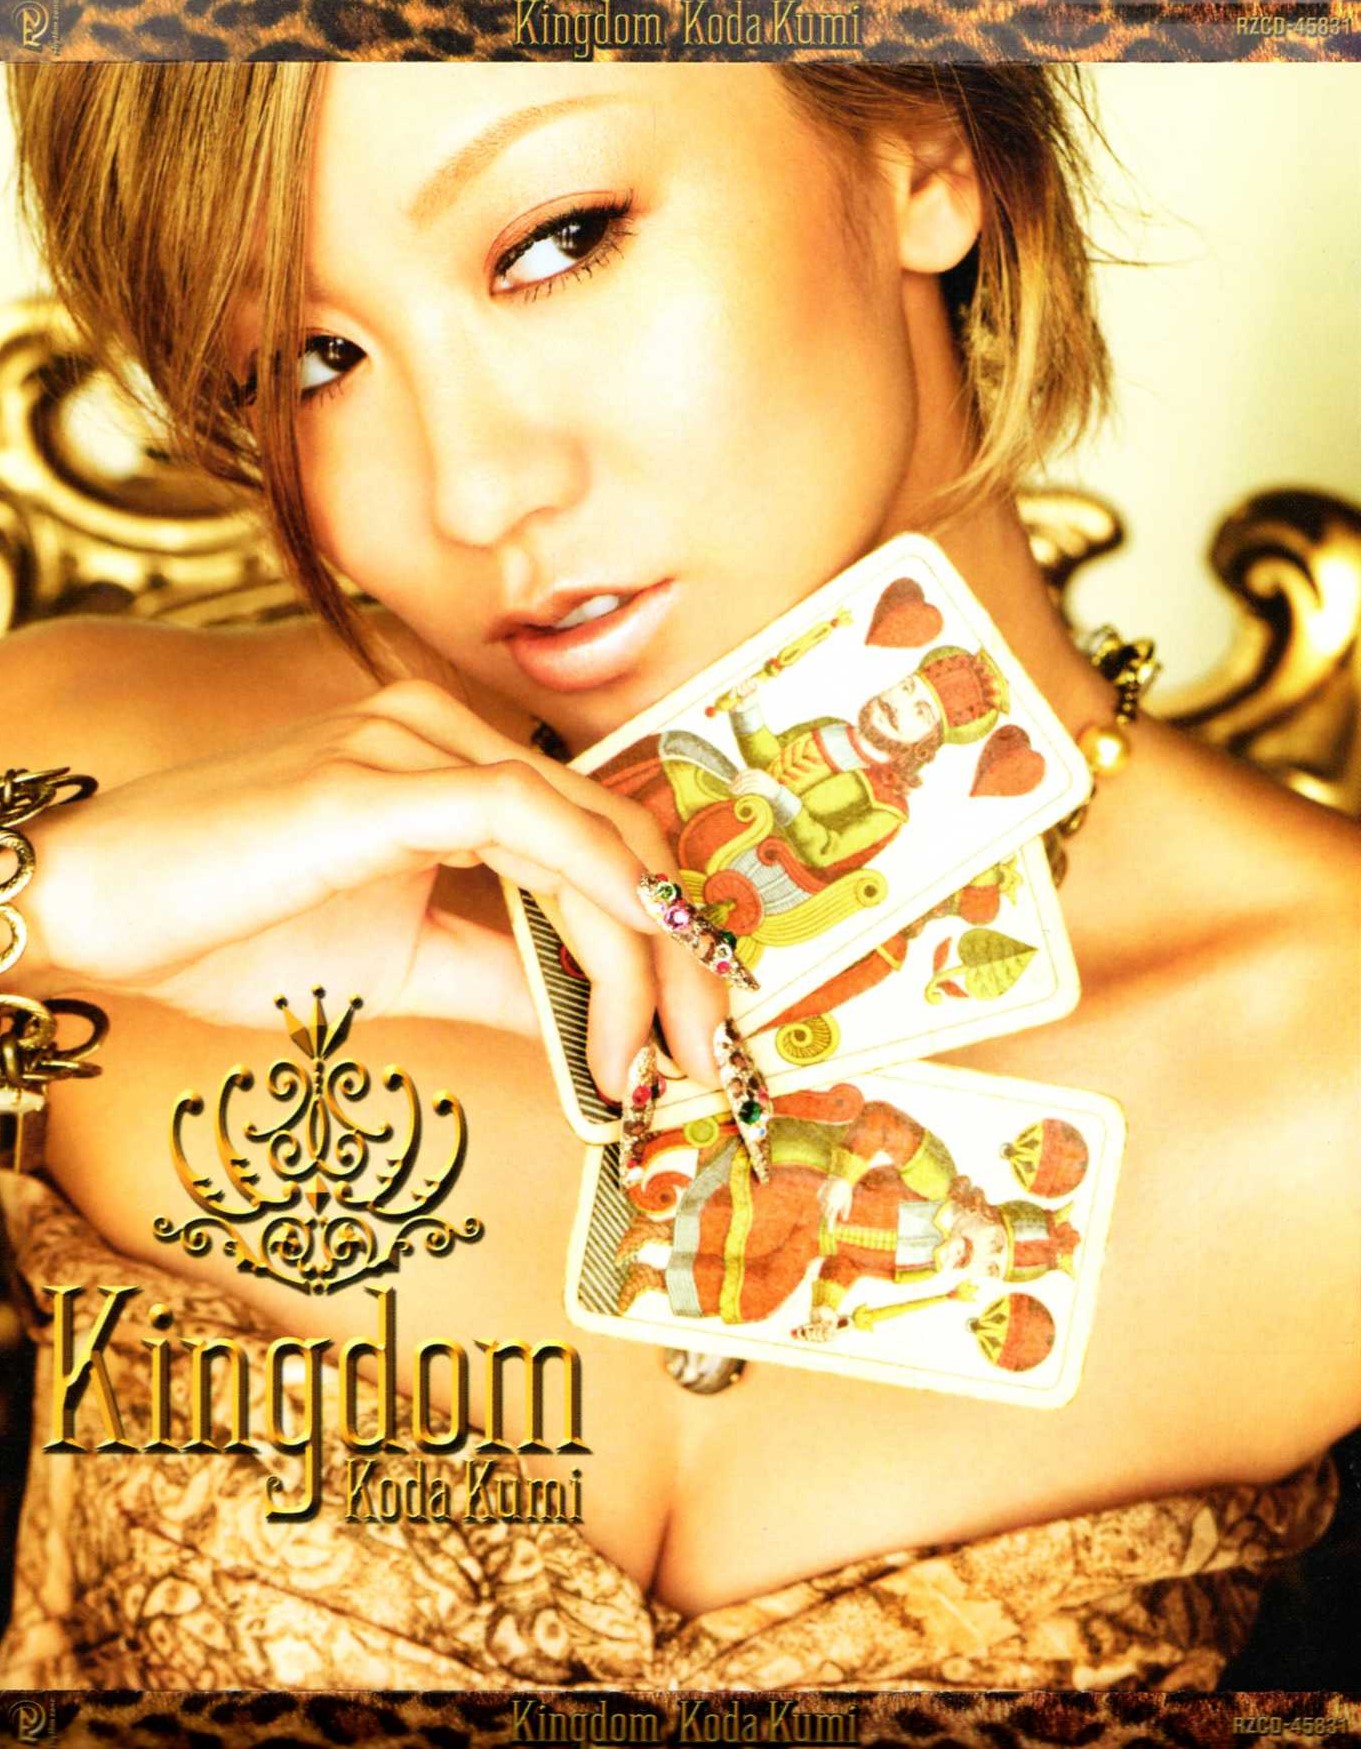 Kingdom (CD)